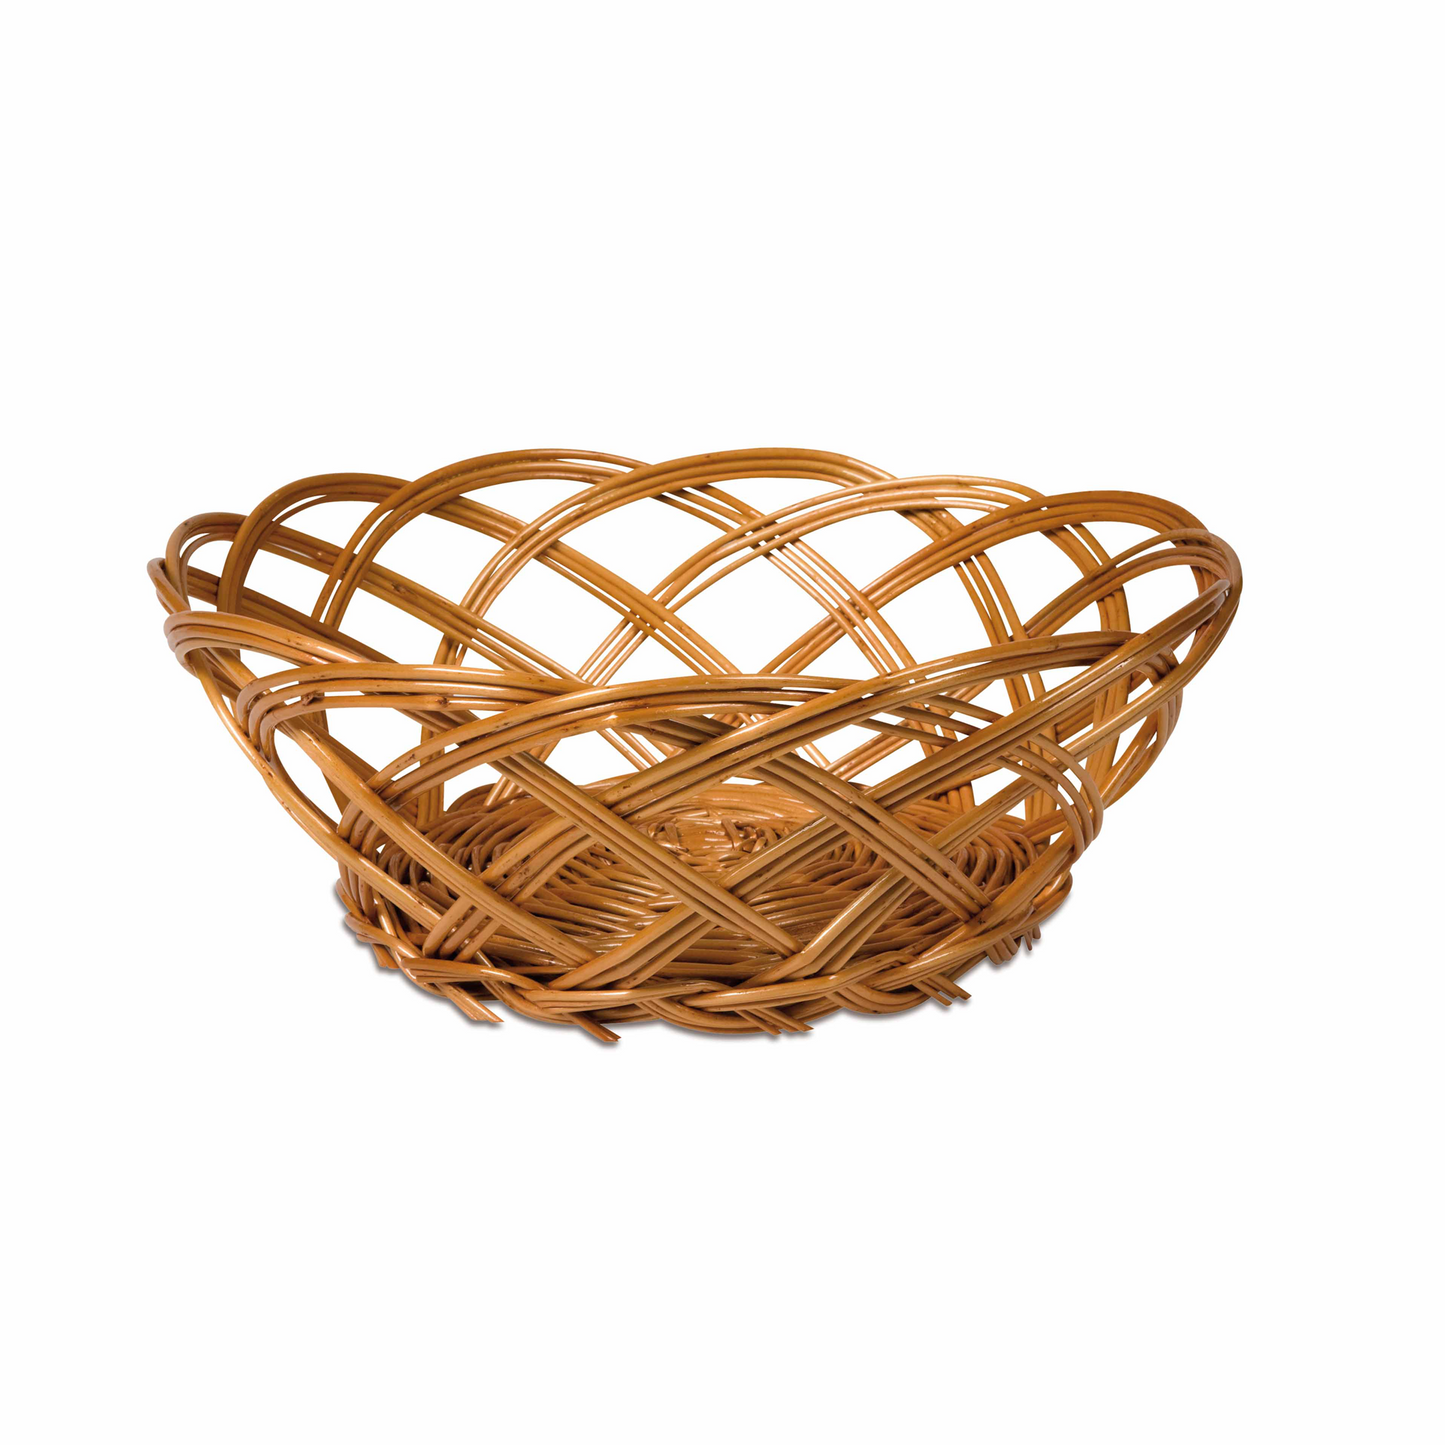 Basket of geometric solids - Nienhuis AMI